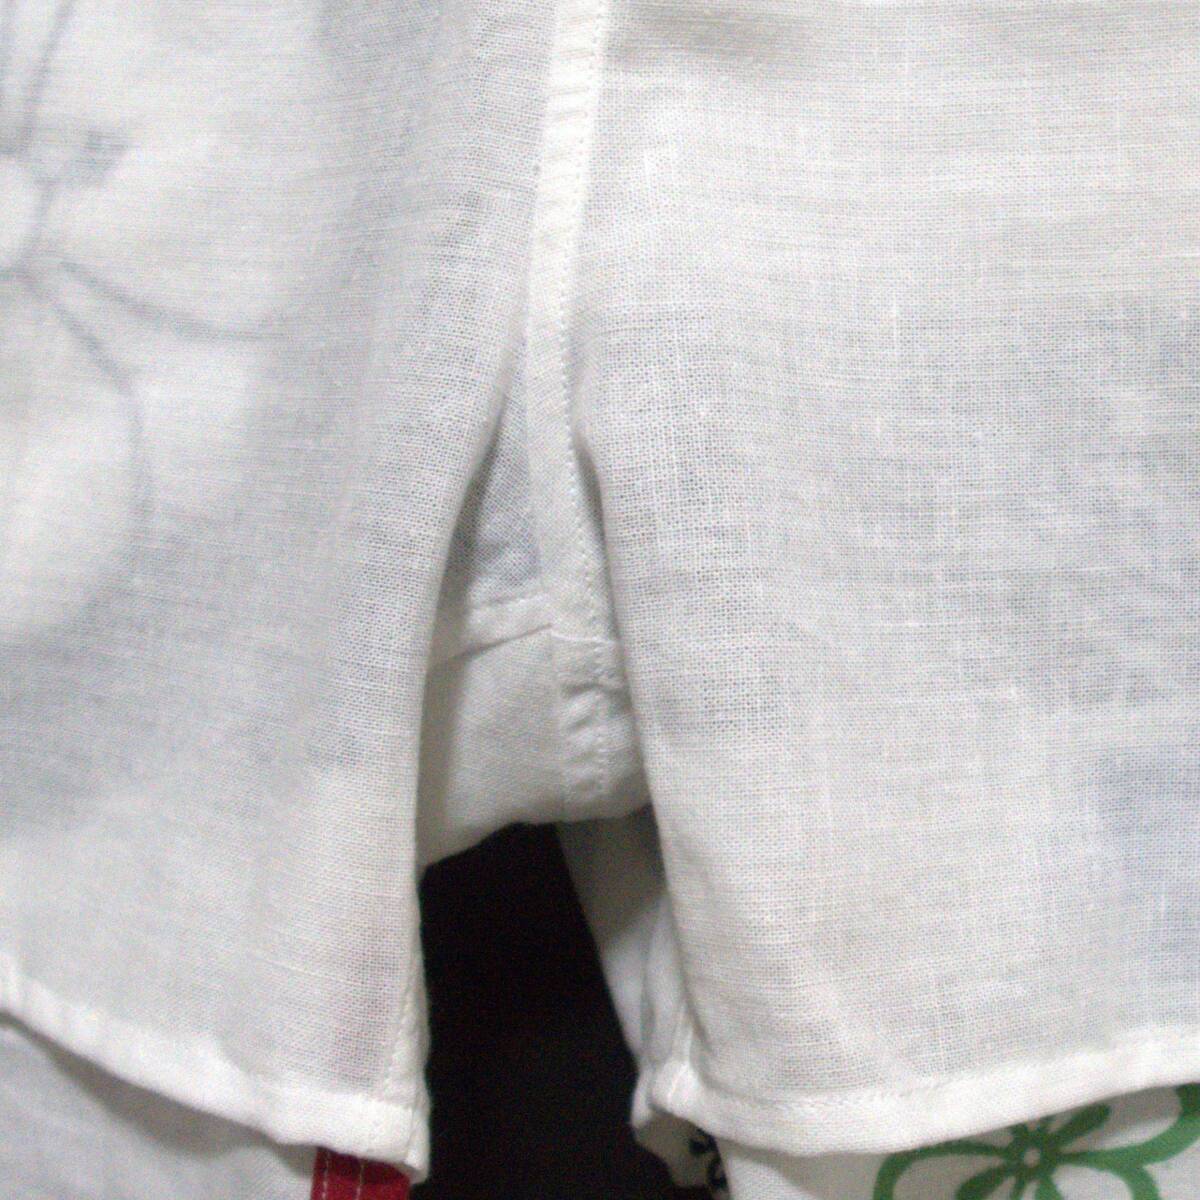  sendai .... men's underpants like Bermuda shorts Samue pants L size handmade Showa era sendai one high ground origin hand ... hand .. room wear H088